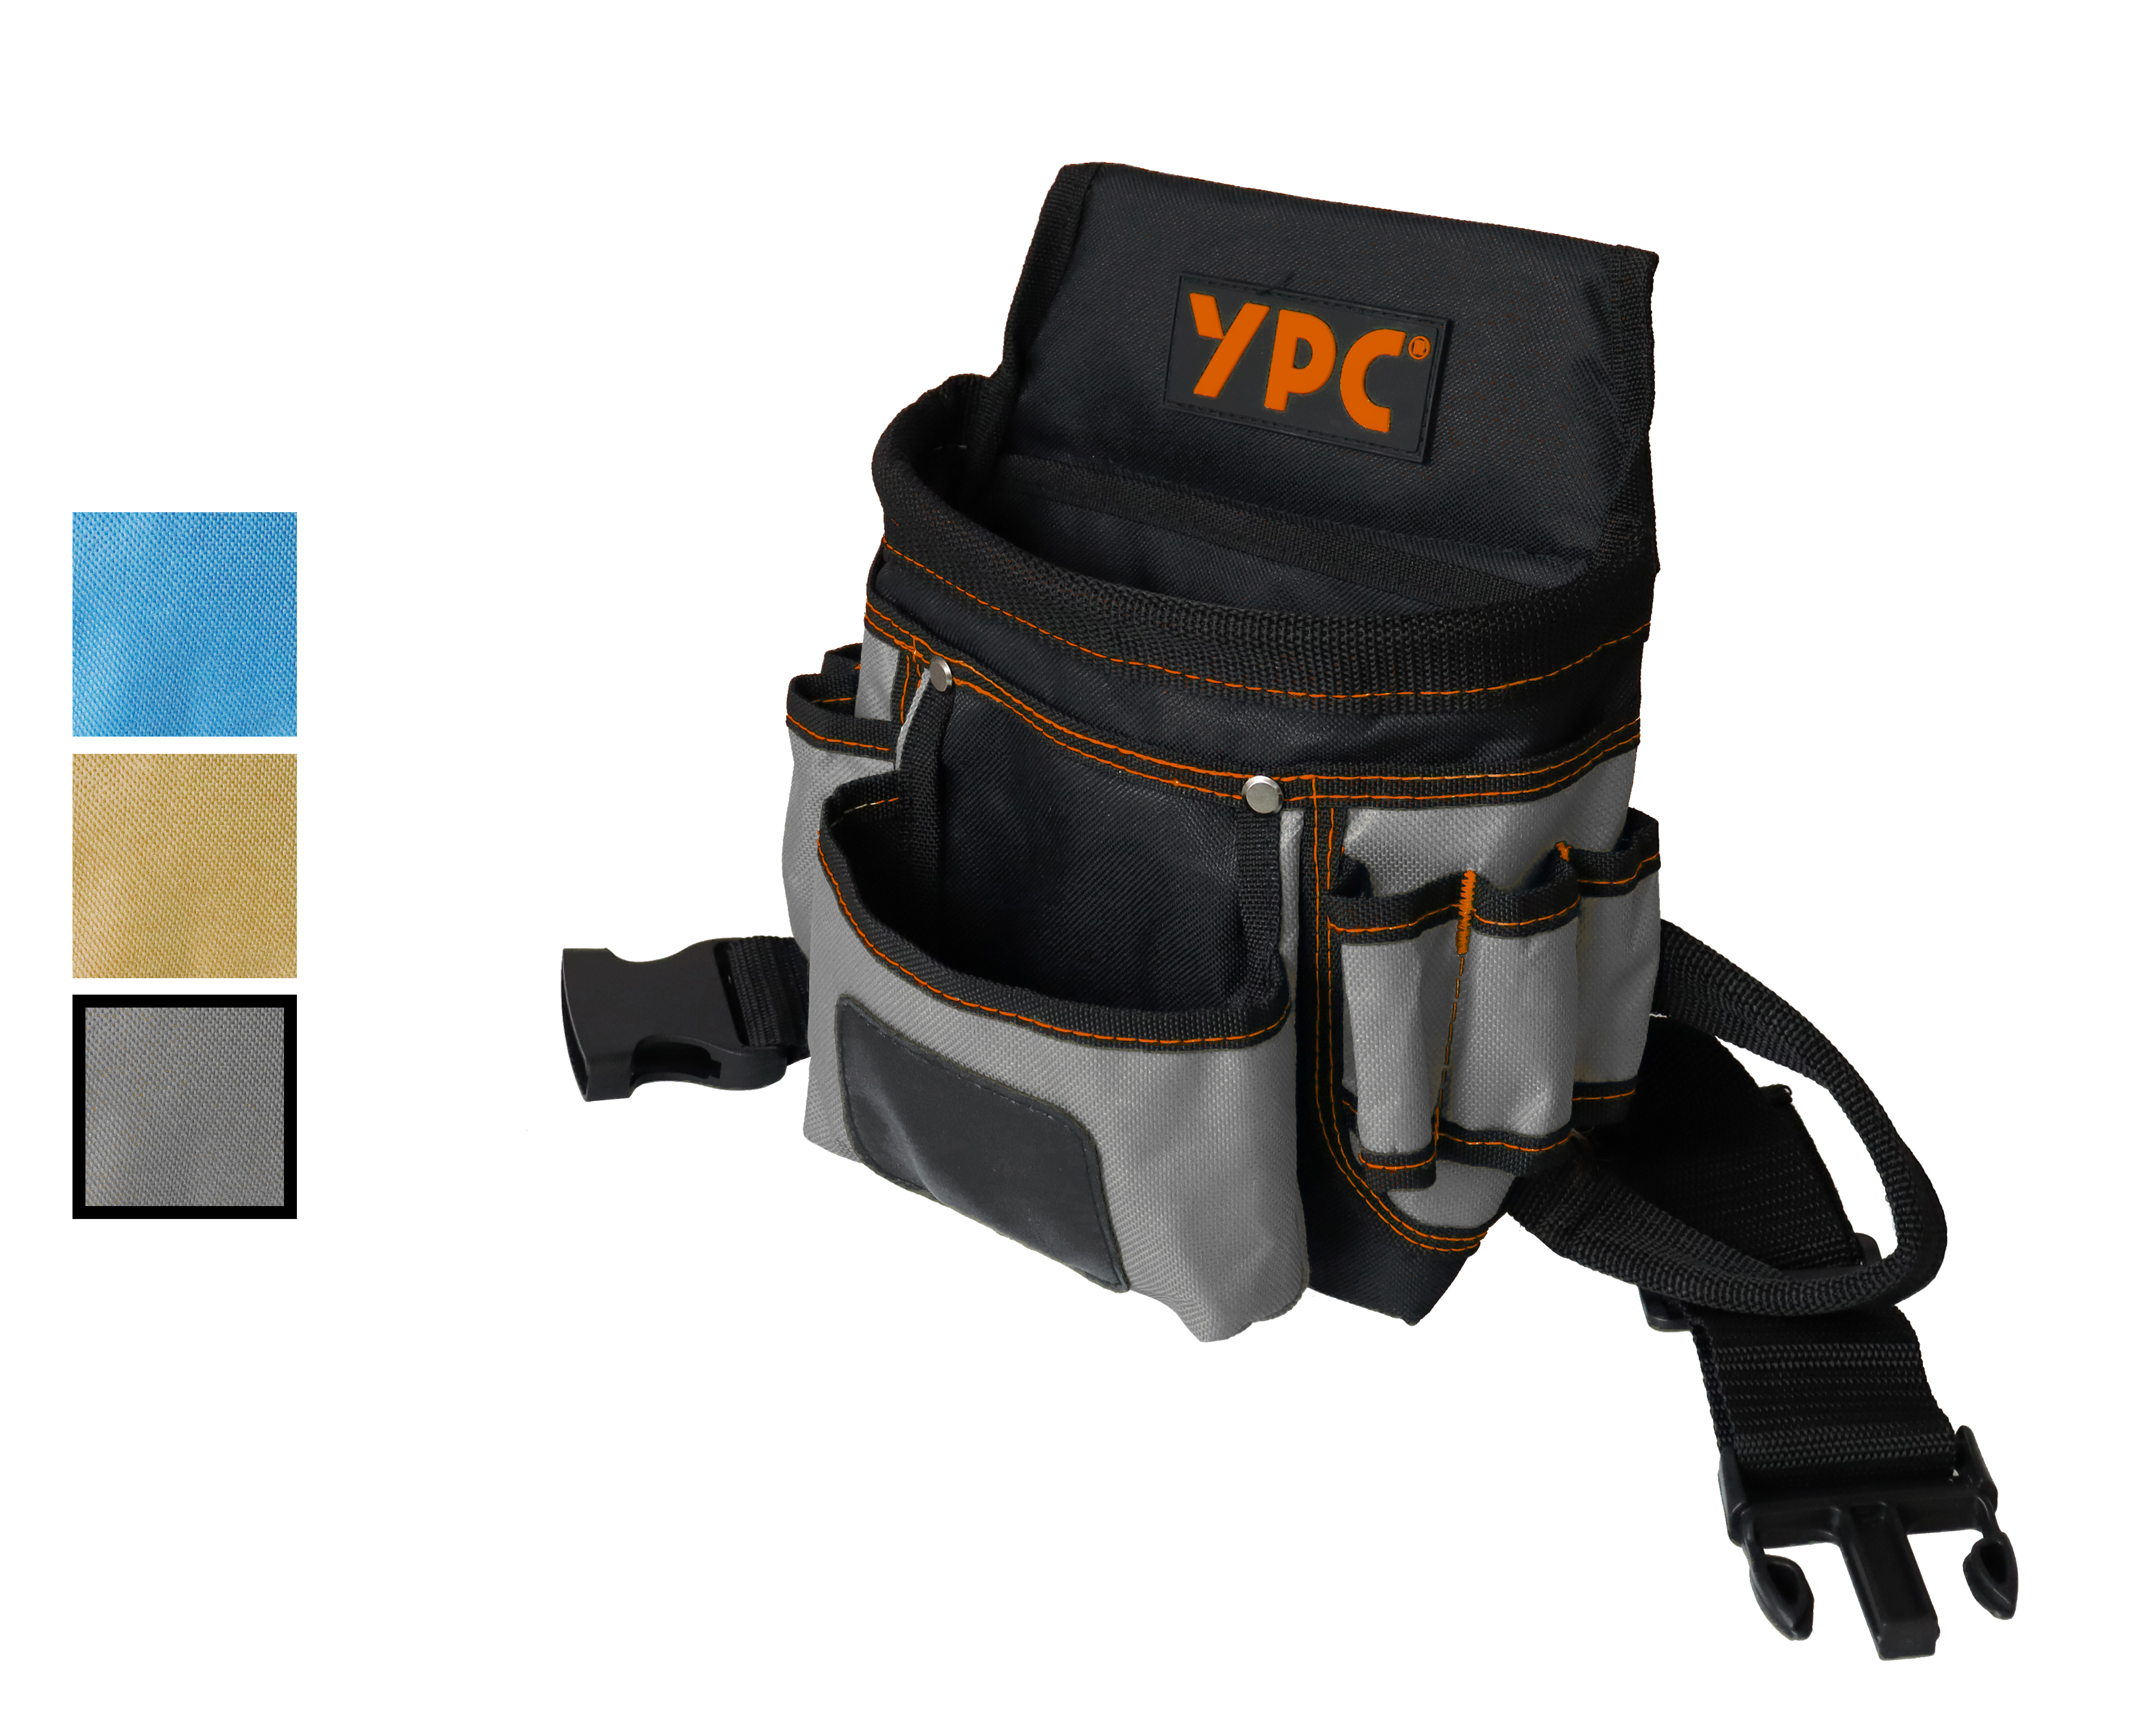 "Presto" belt bag XL, grey-black, 27x21x13cm, 5 kg load capacity